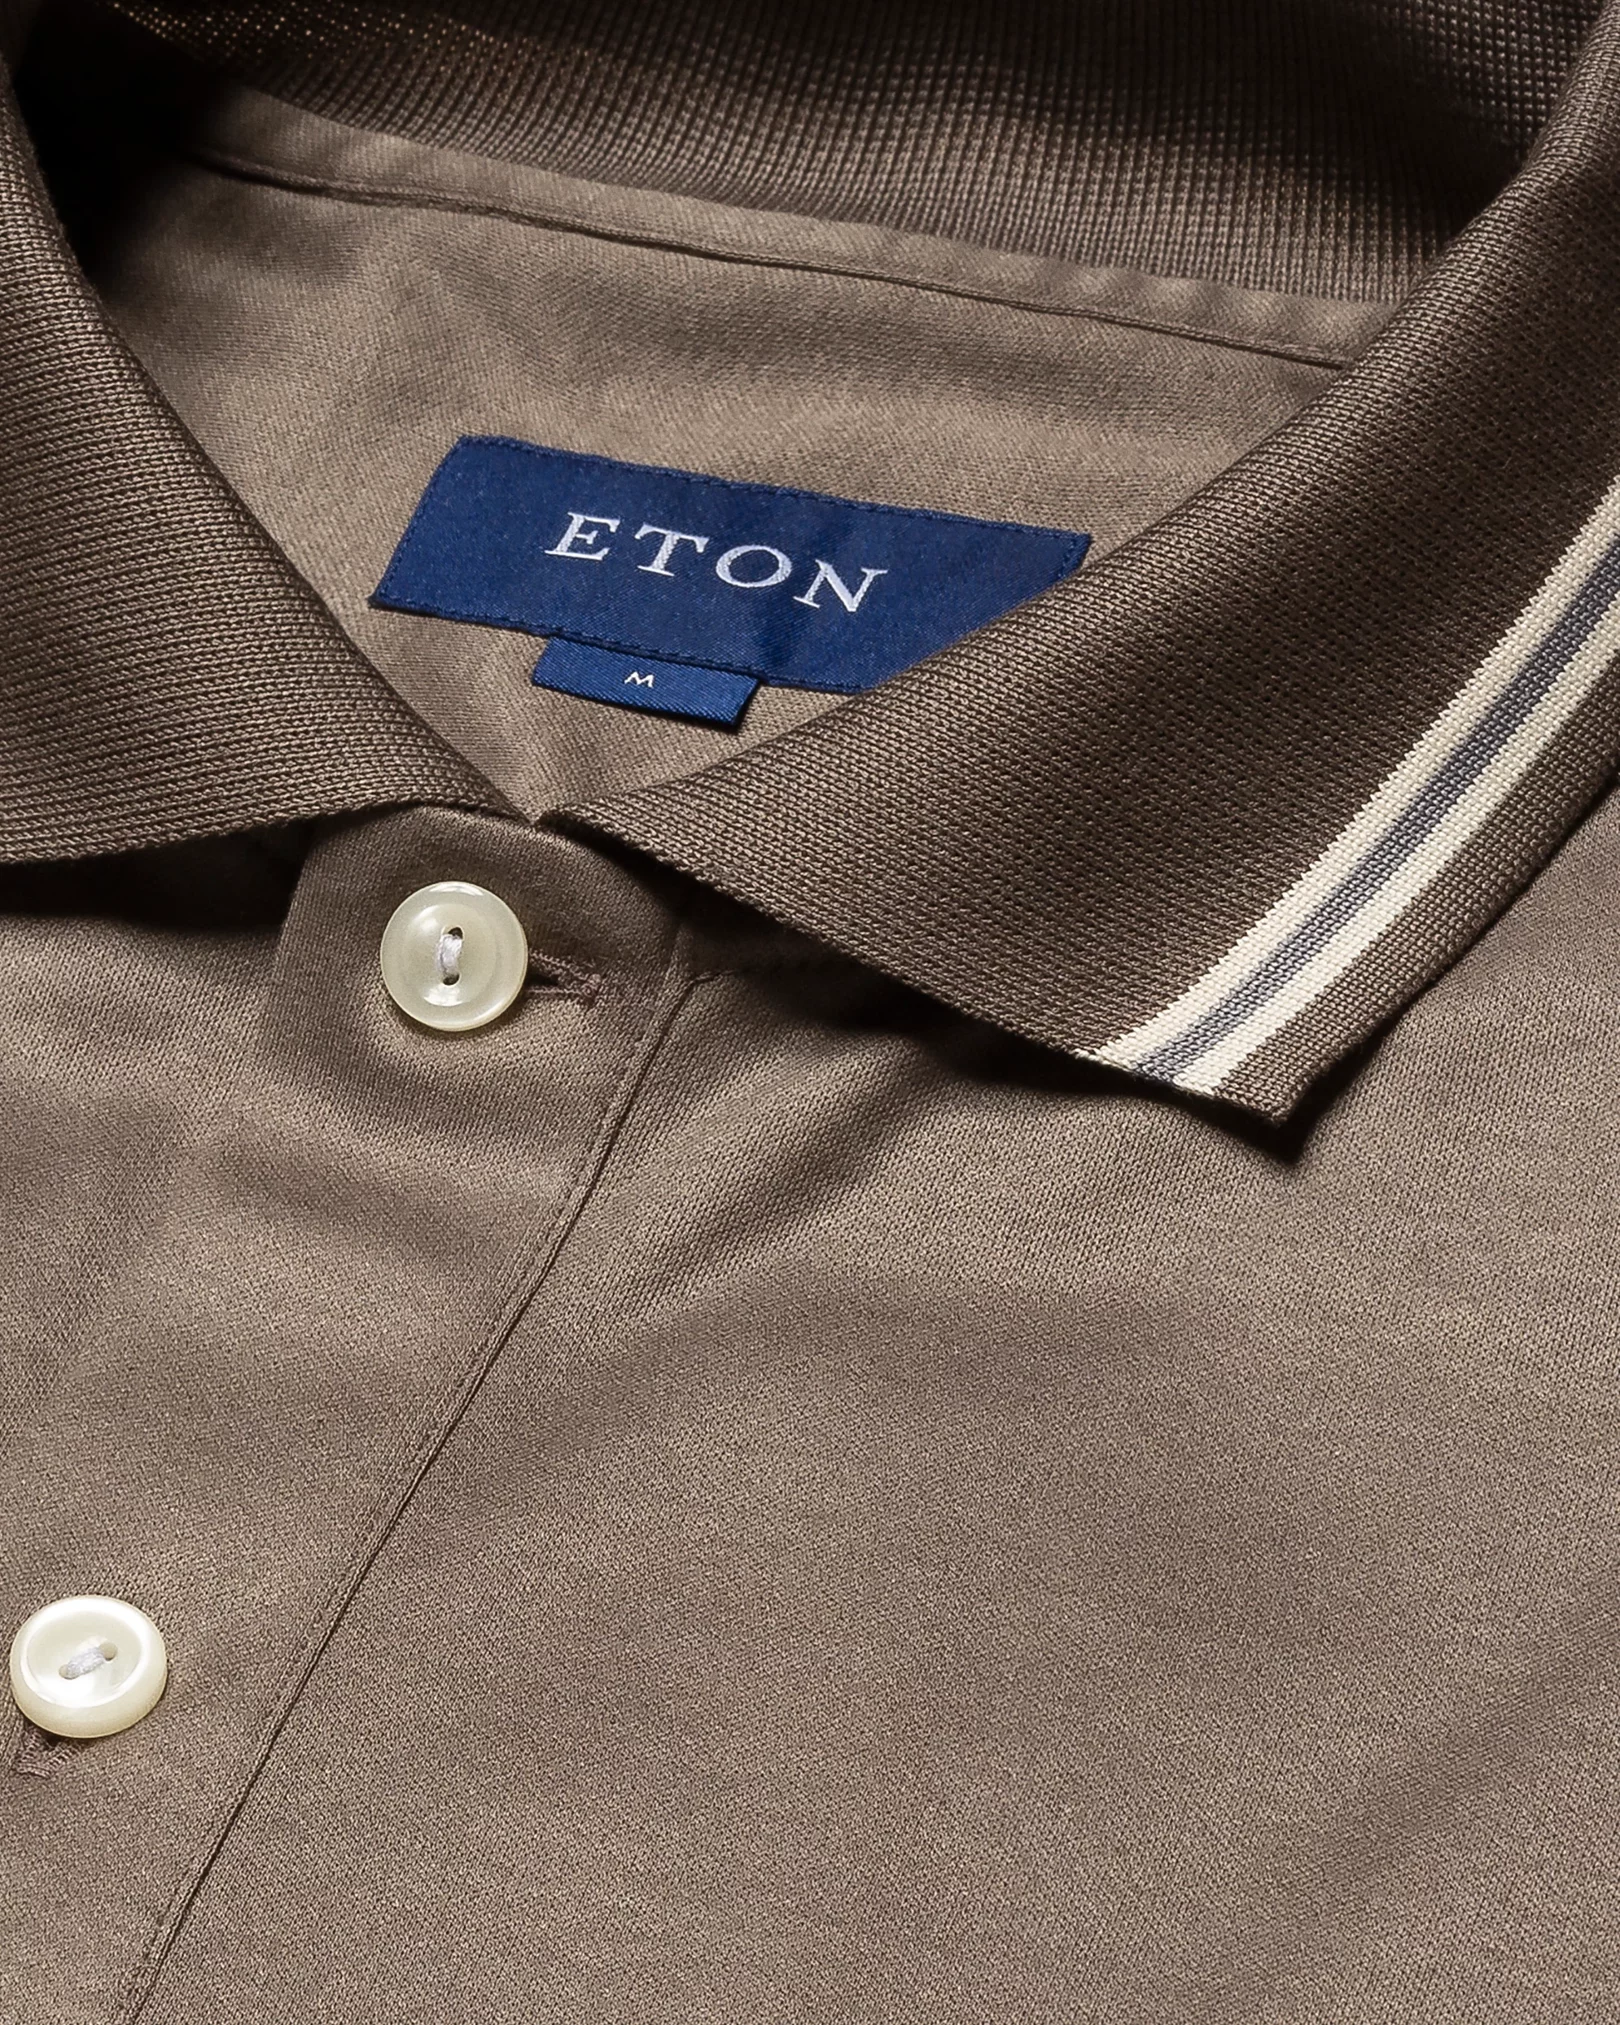 Eton - light grey jersey knitted